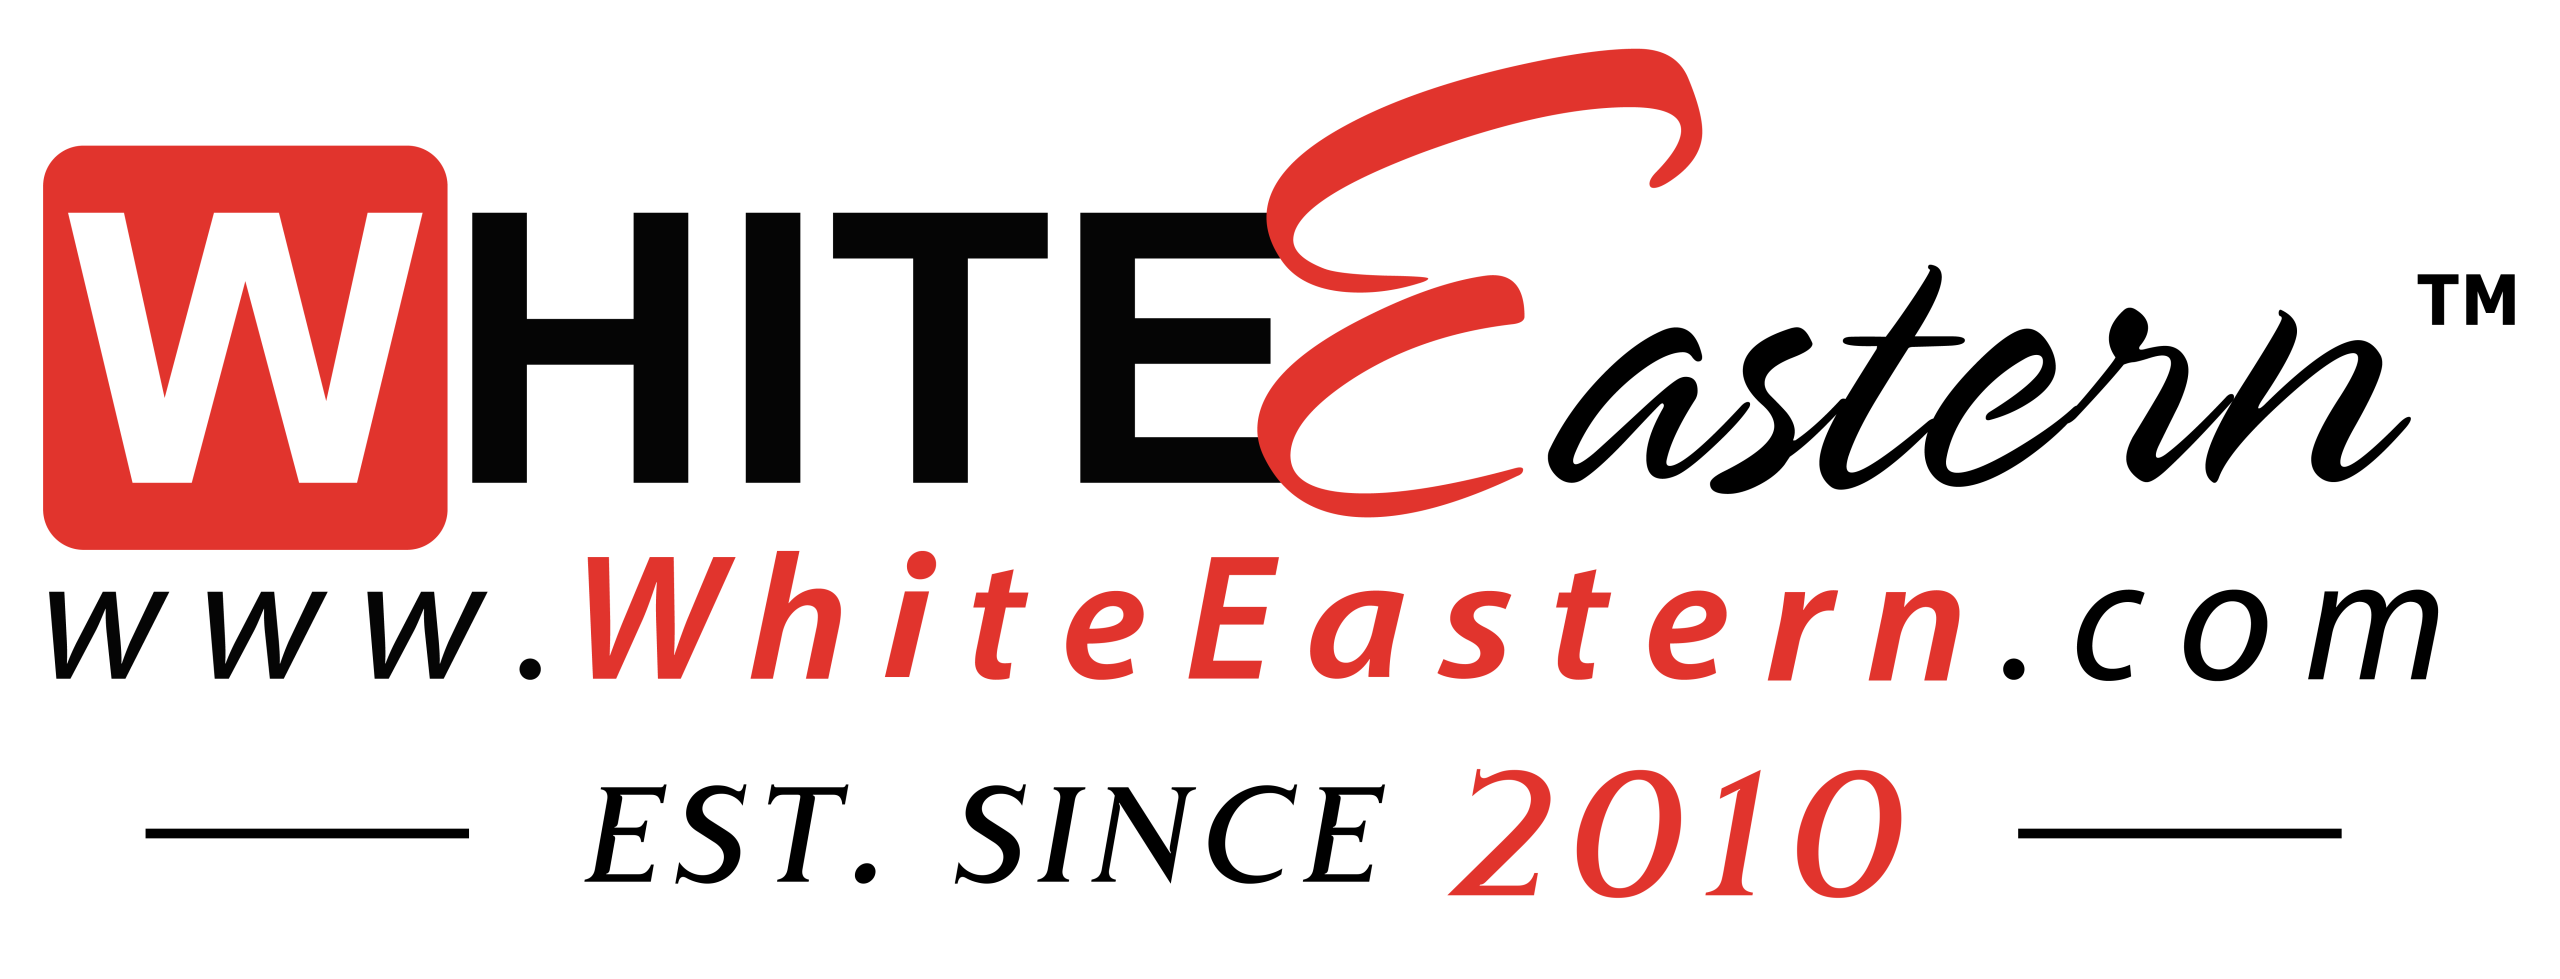 White Eastern